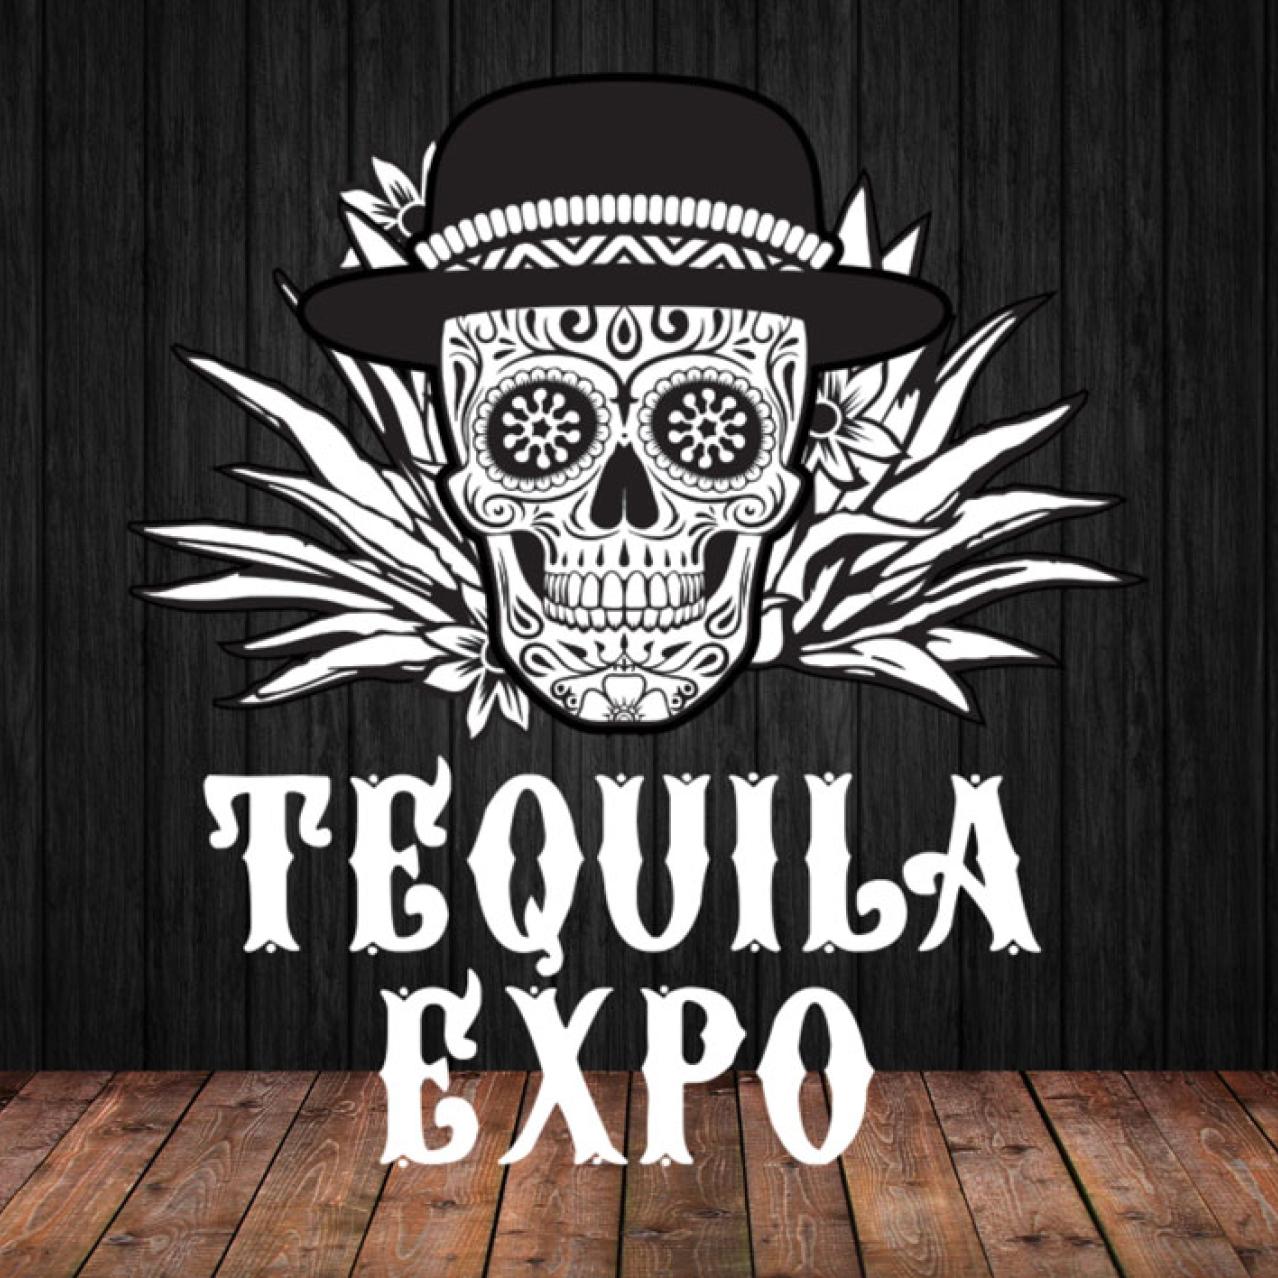 Niagara Falls Tequila Expo